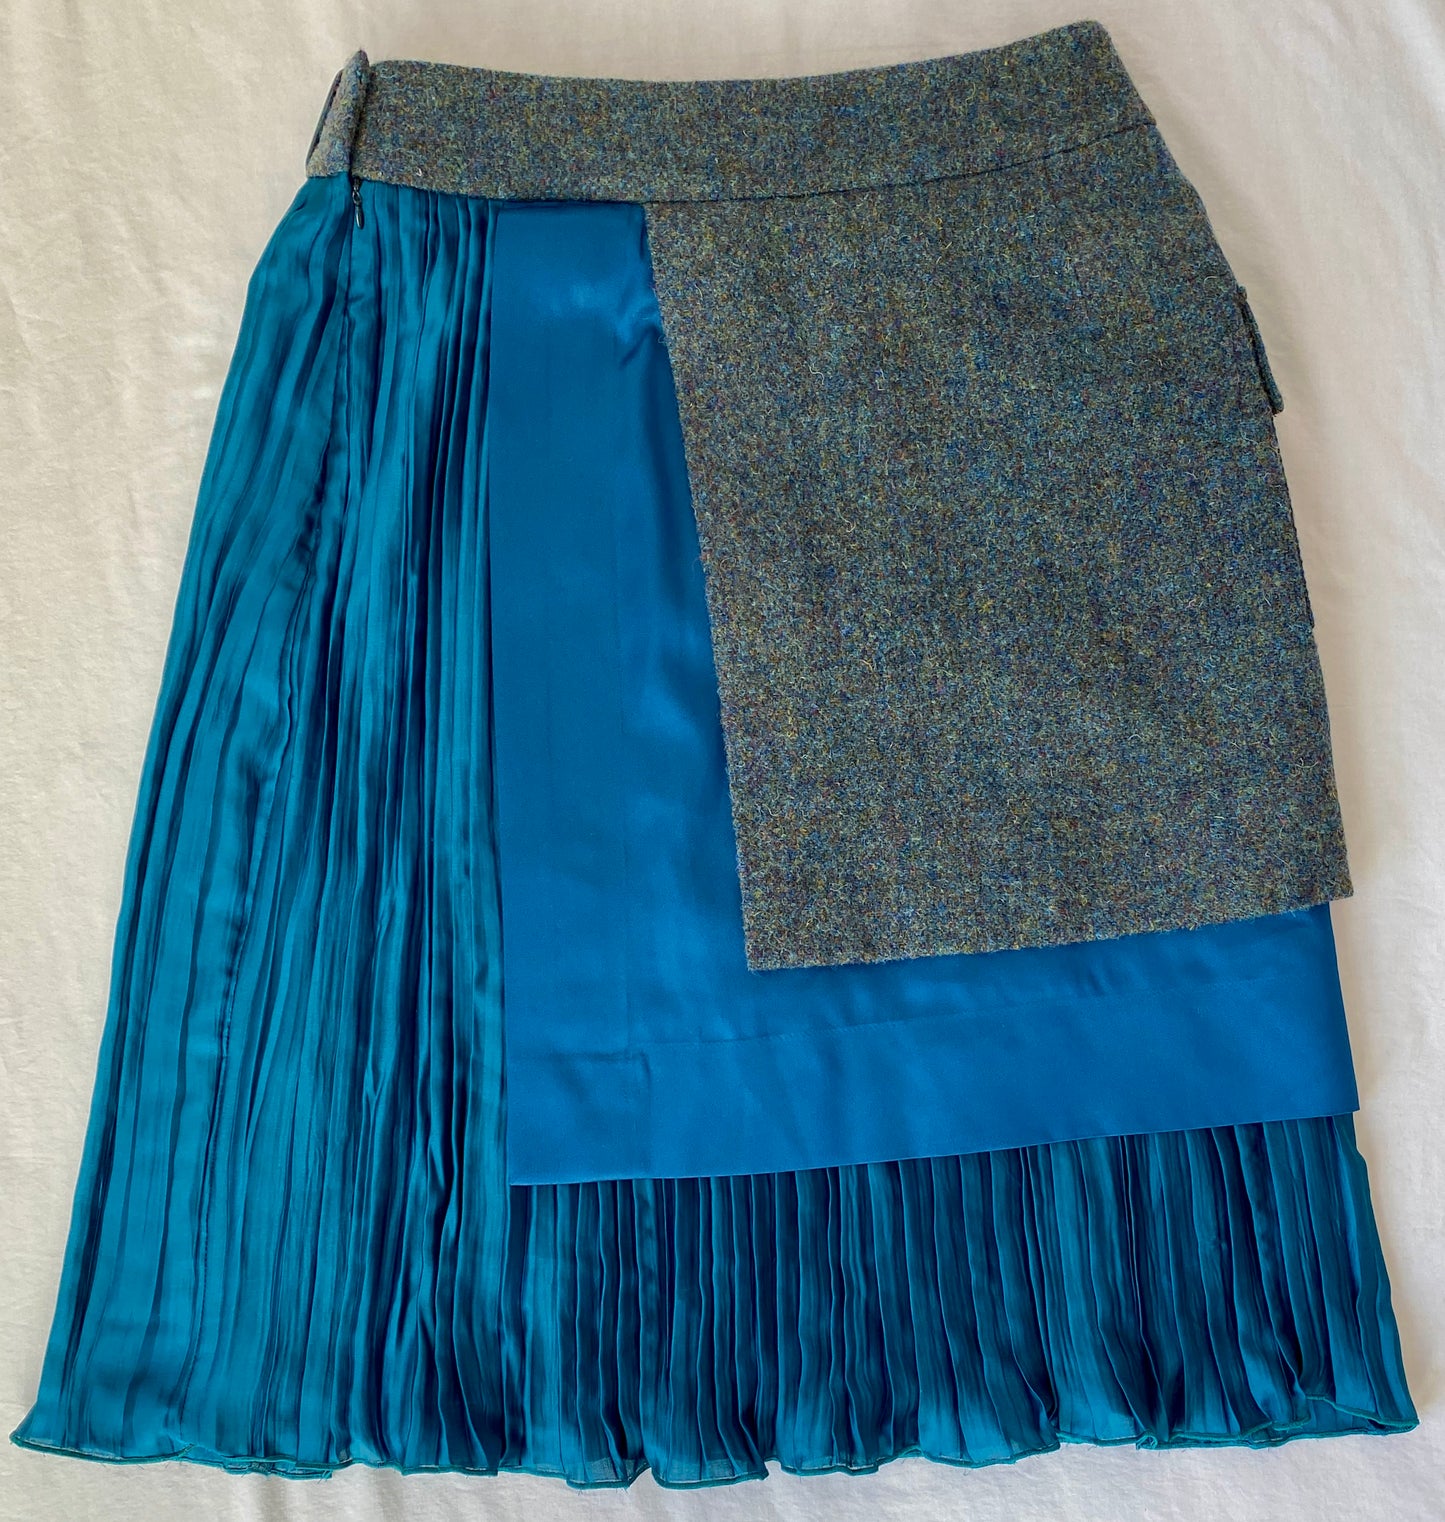 Ranun Skirt with Hazel Harris Tweed and Silky Layers